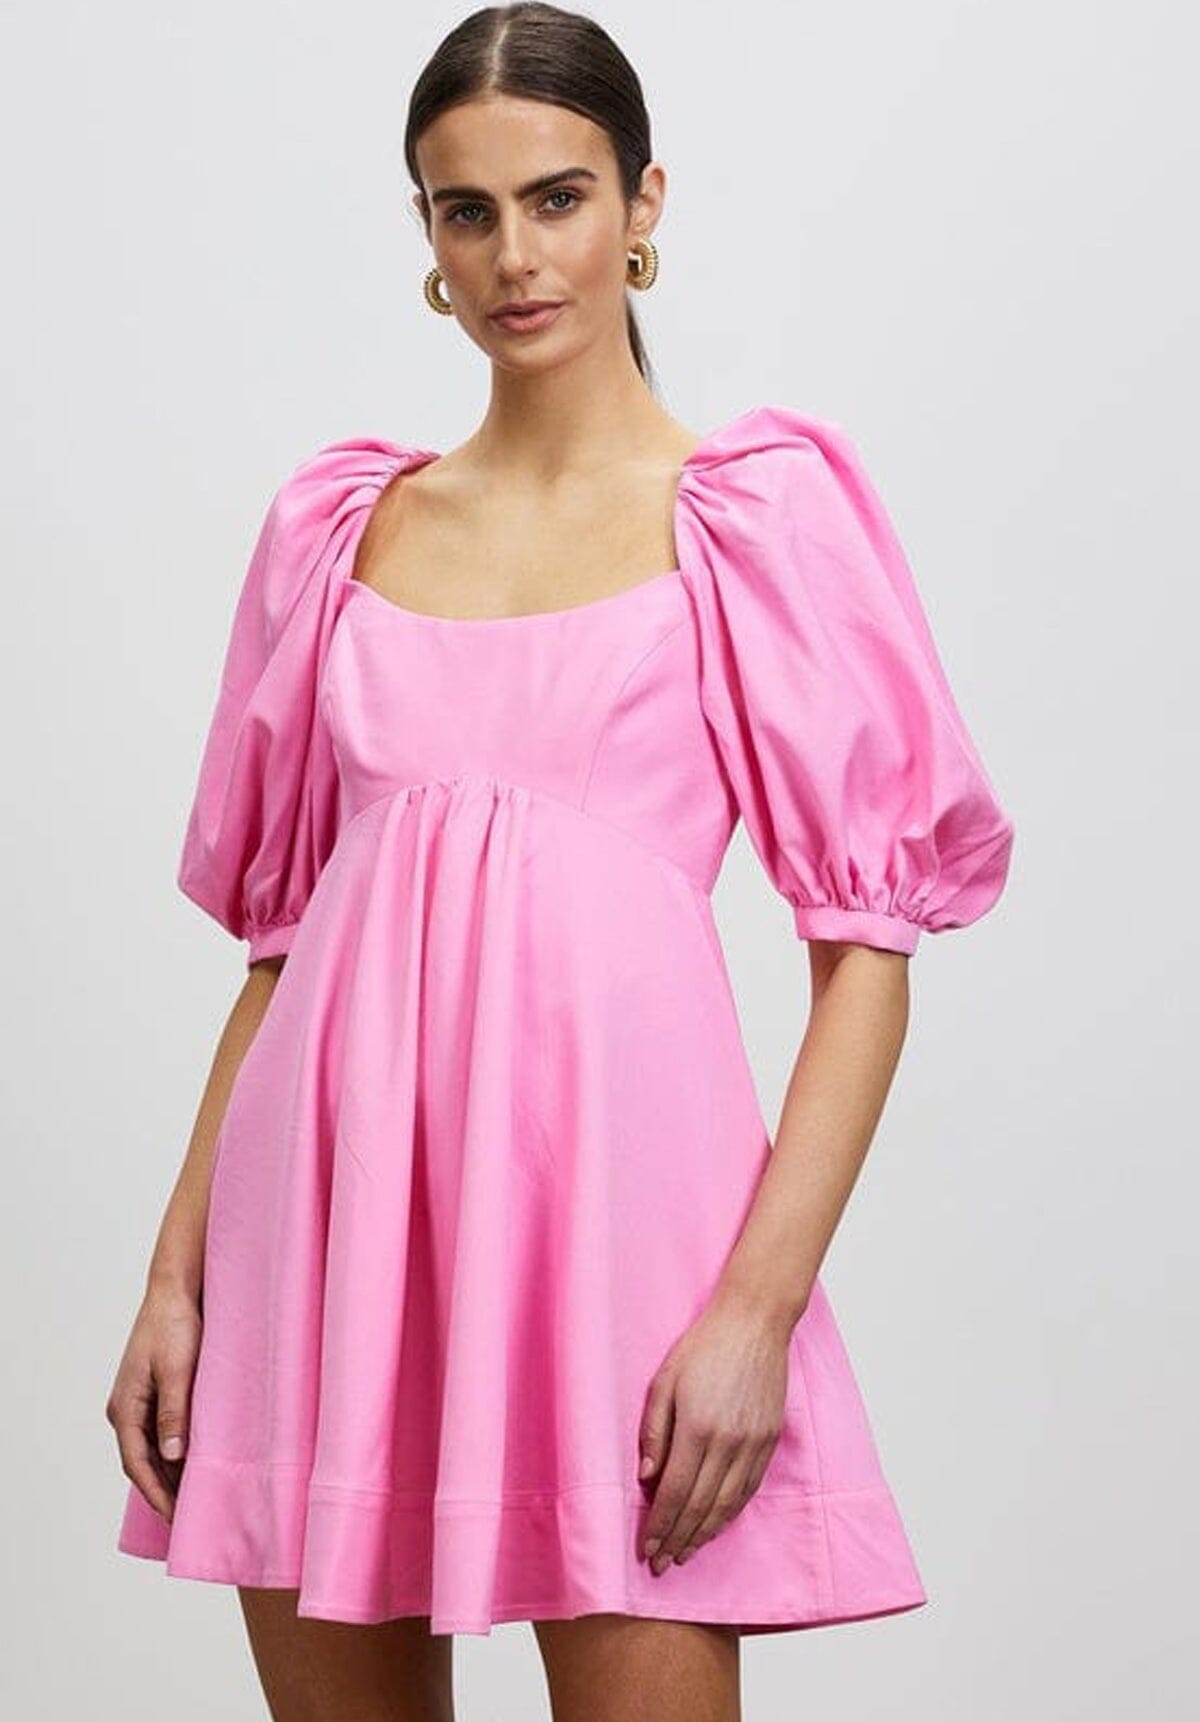 Octavia Dress - Pink Clothing Acler 